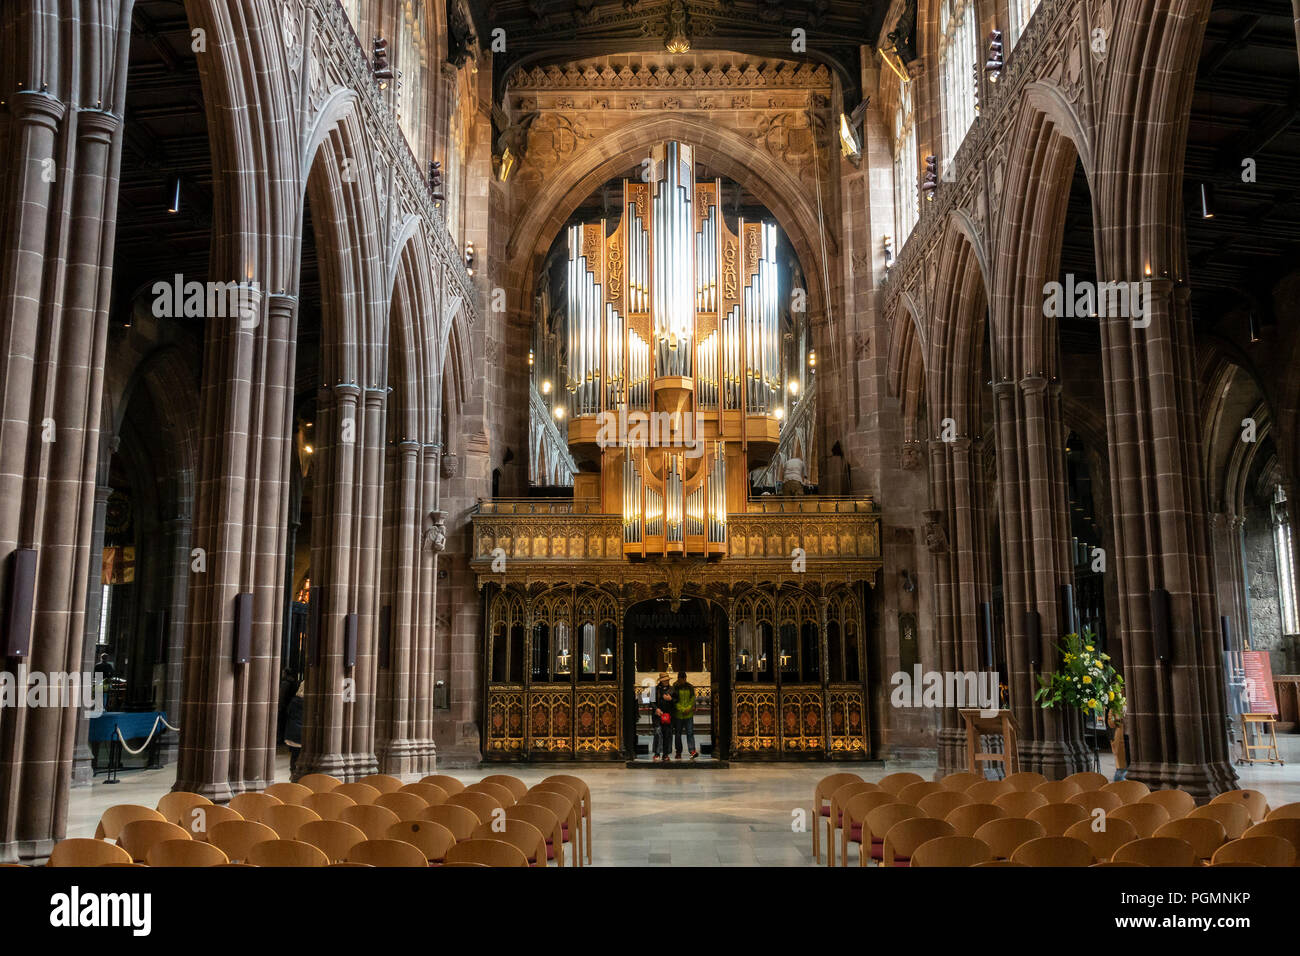 Nave central de la Catedral de Manchester, en Manchester, Inglaterra. Foto de stock